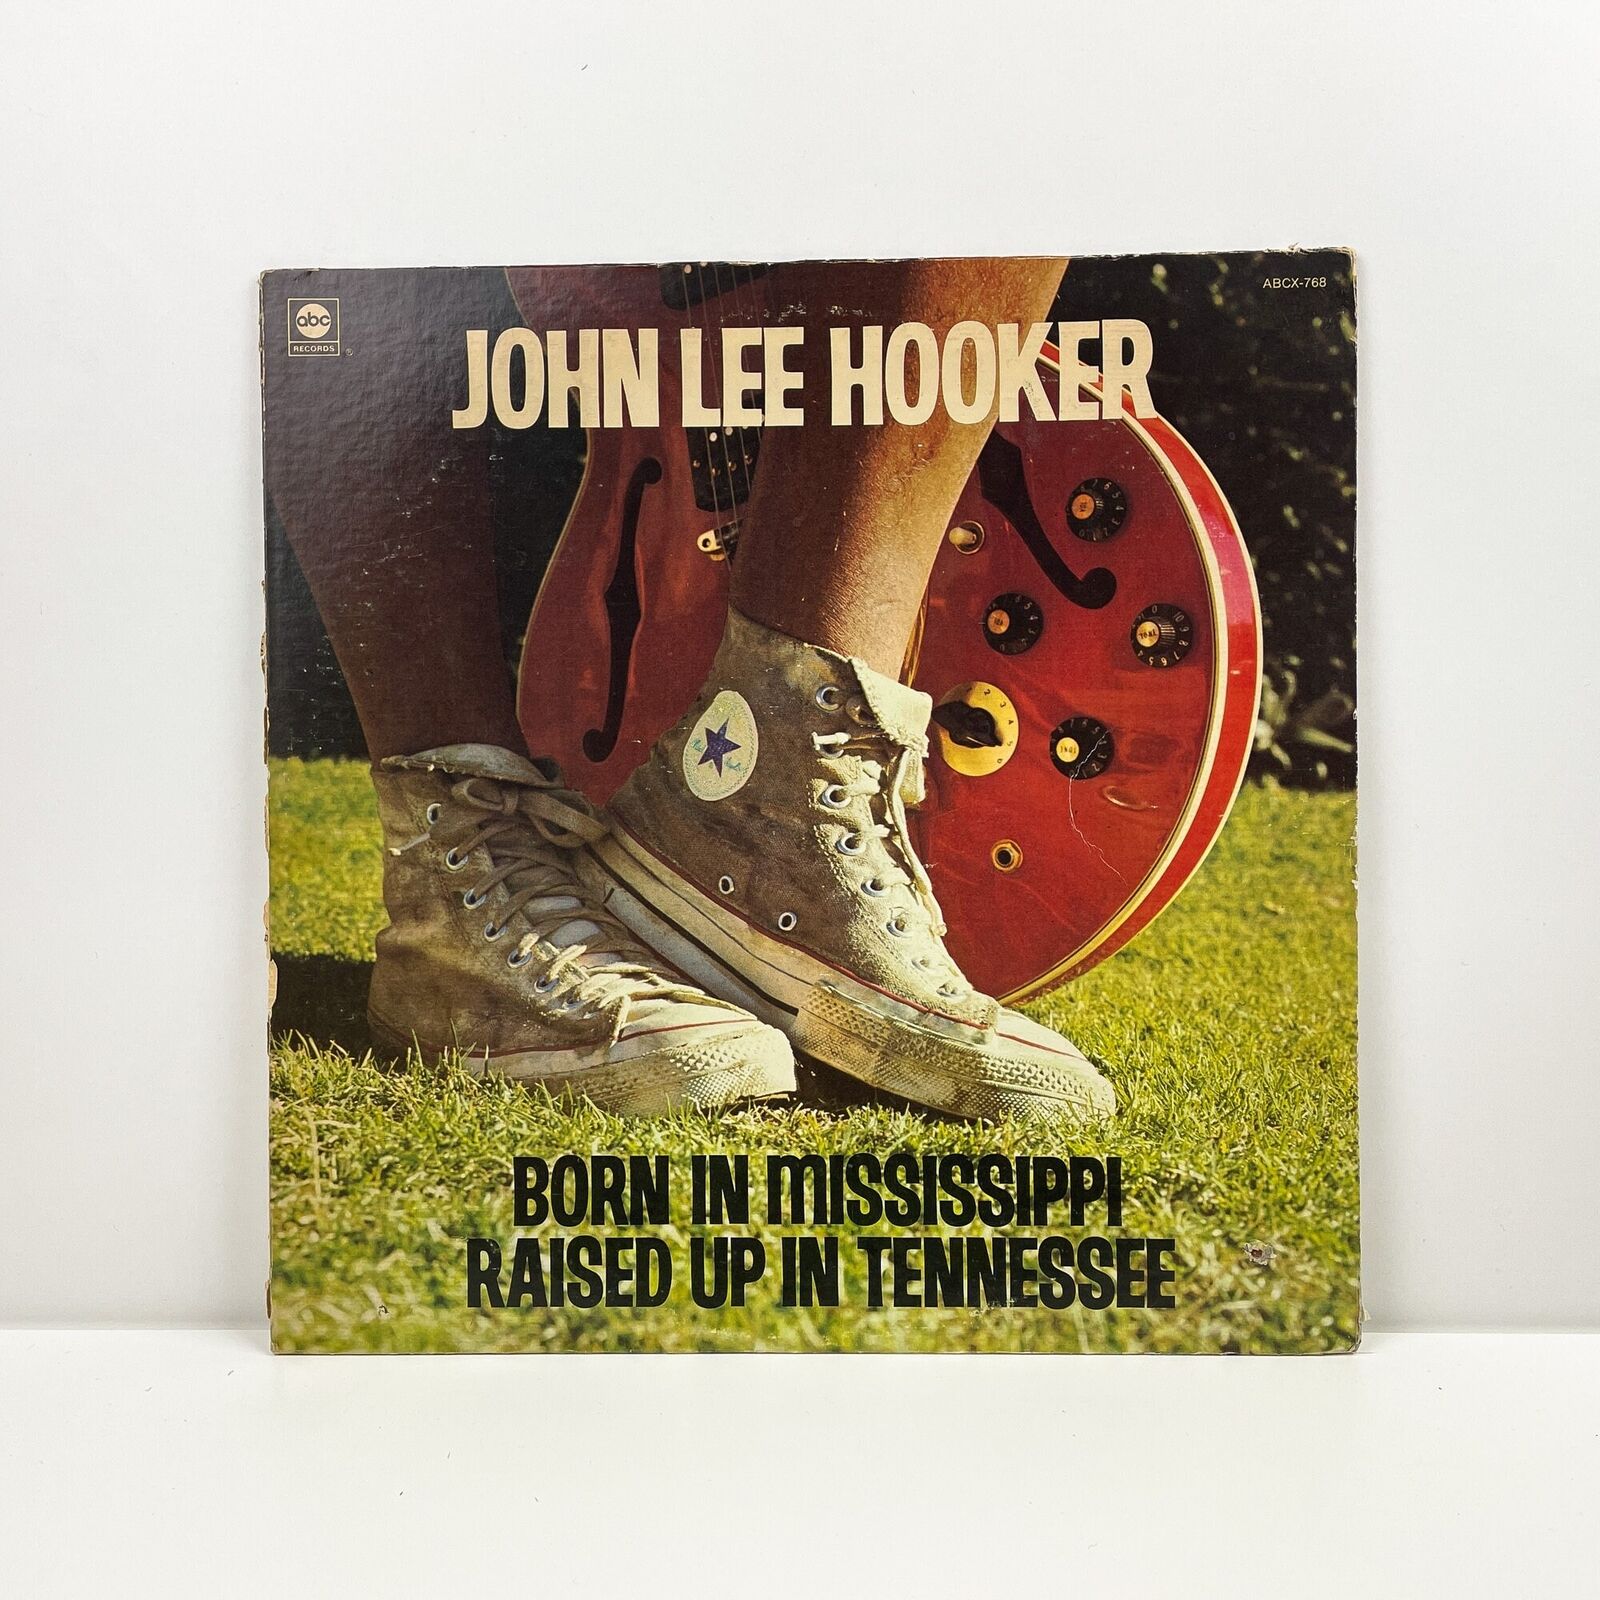 John Lee Hooker - Born In Mississippi, Raised Up In Tennessee - Vinyl LP Record